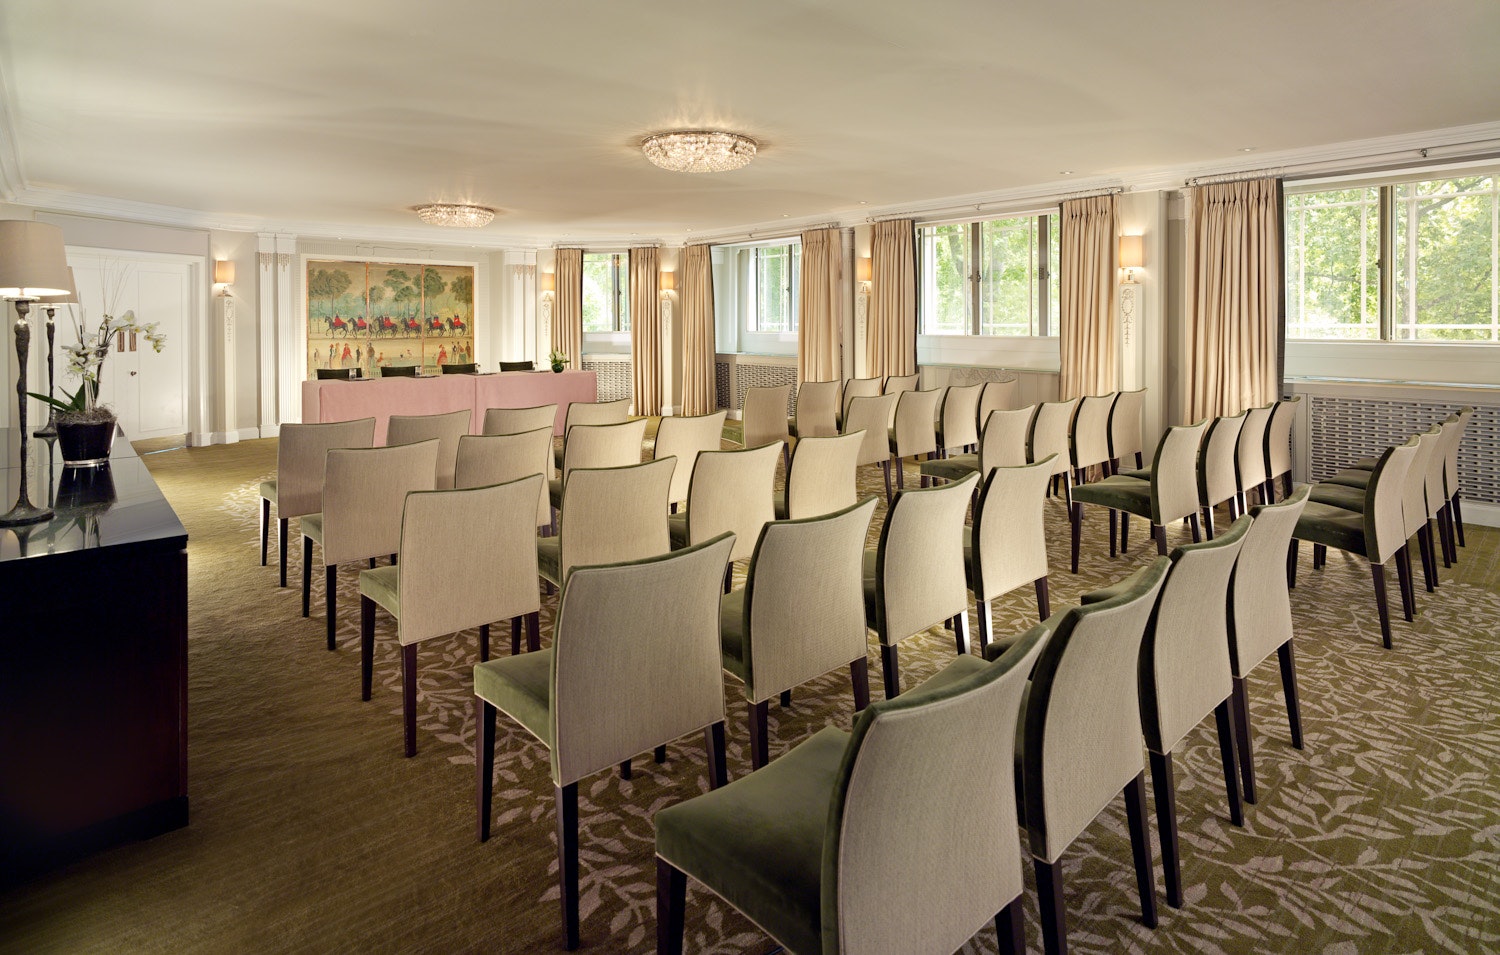 Hotel Conferences Venues in Central London - The Dorchester